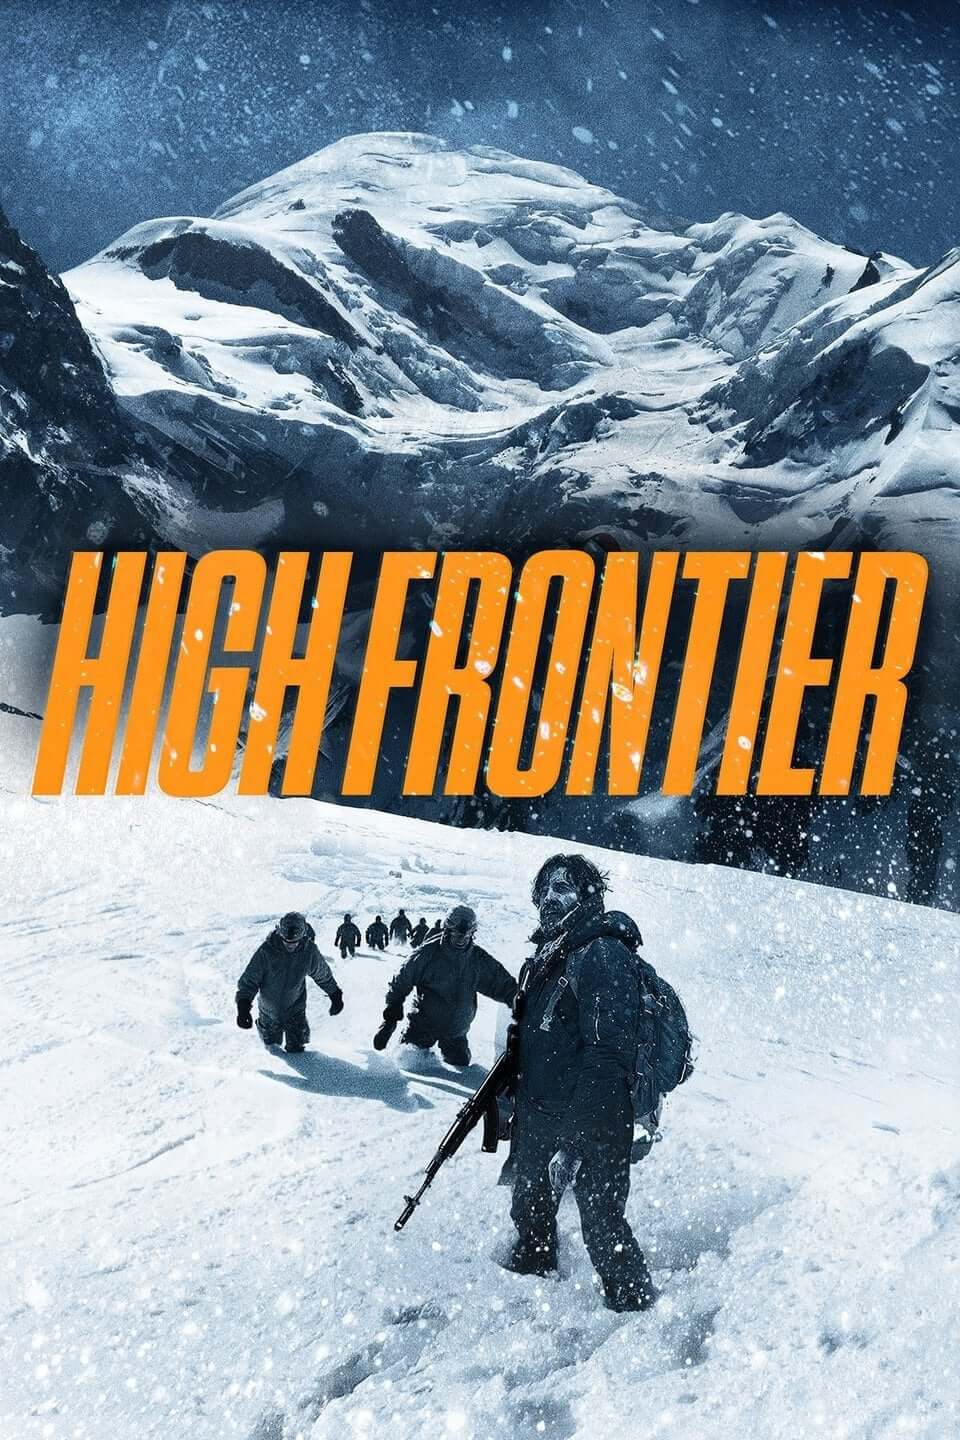 مرز مرتفع (The High Frontier)